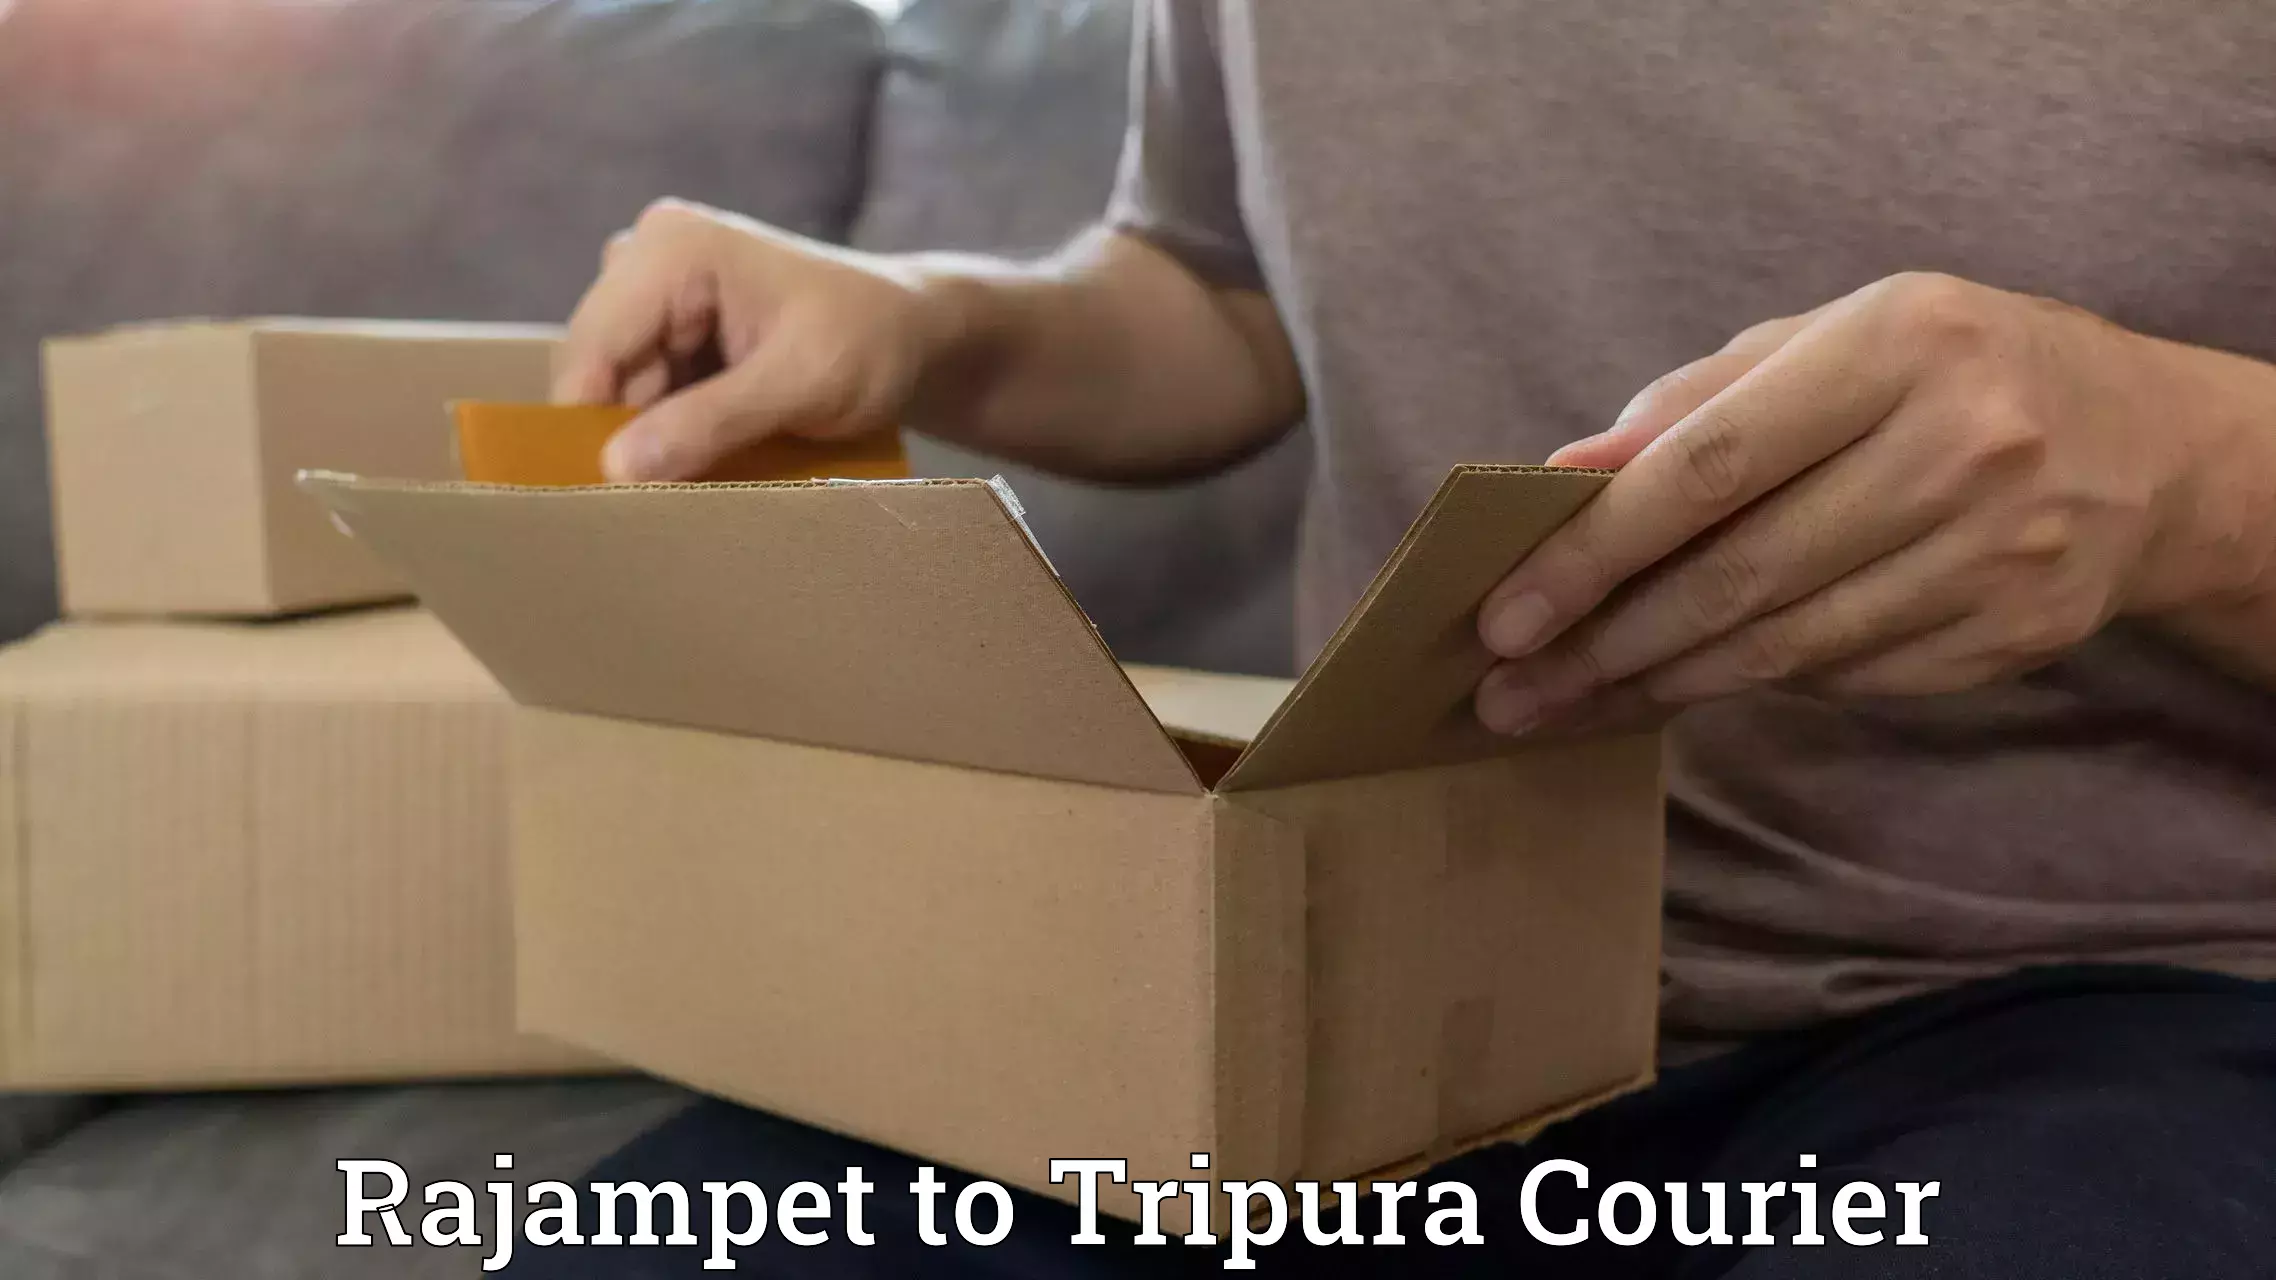 Courier service comparison Rajampet to North Tripura